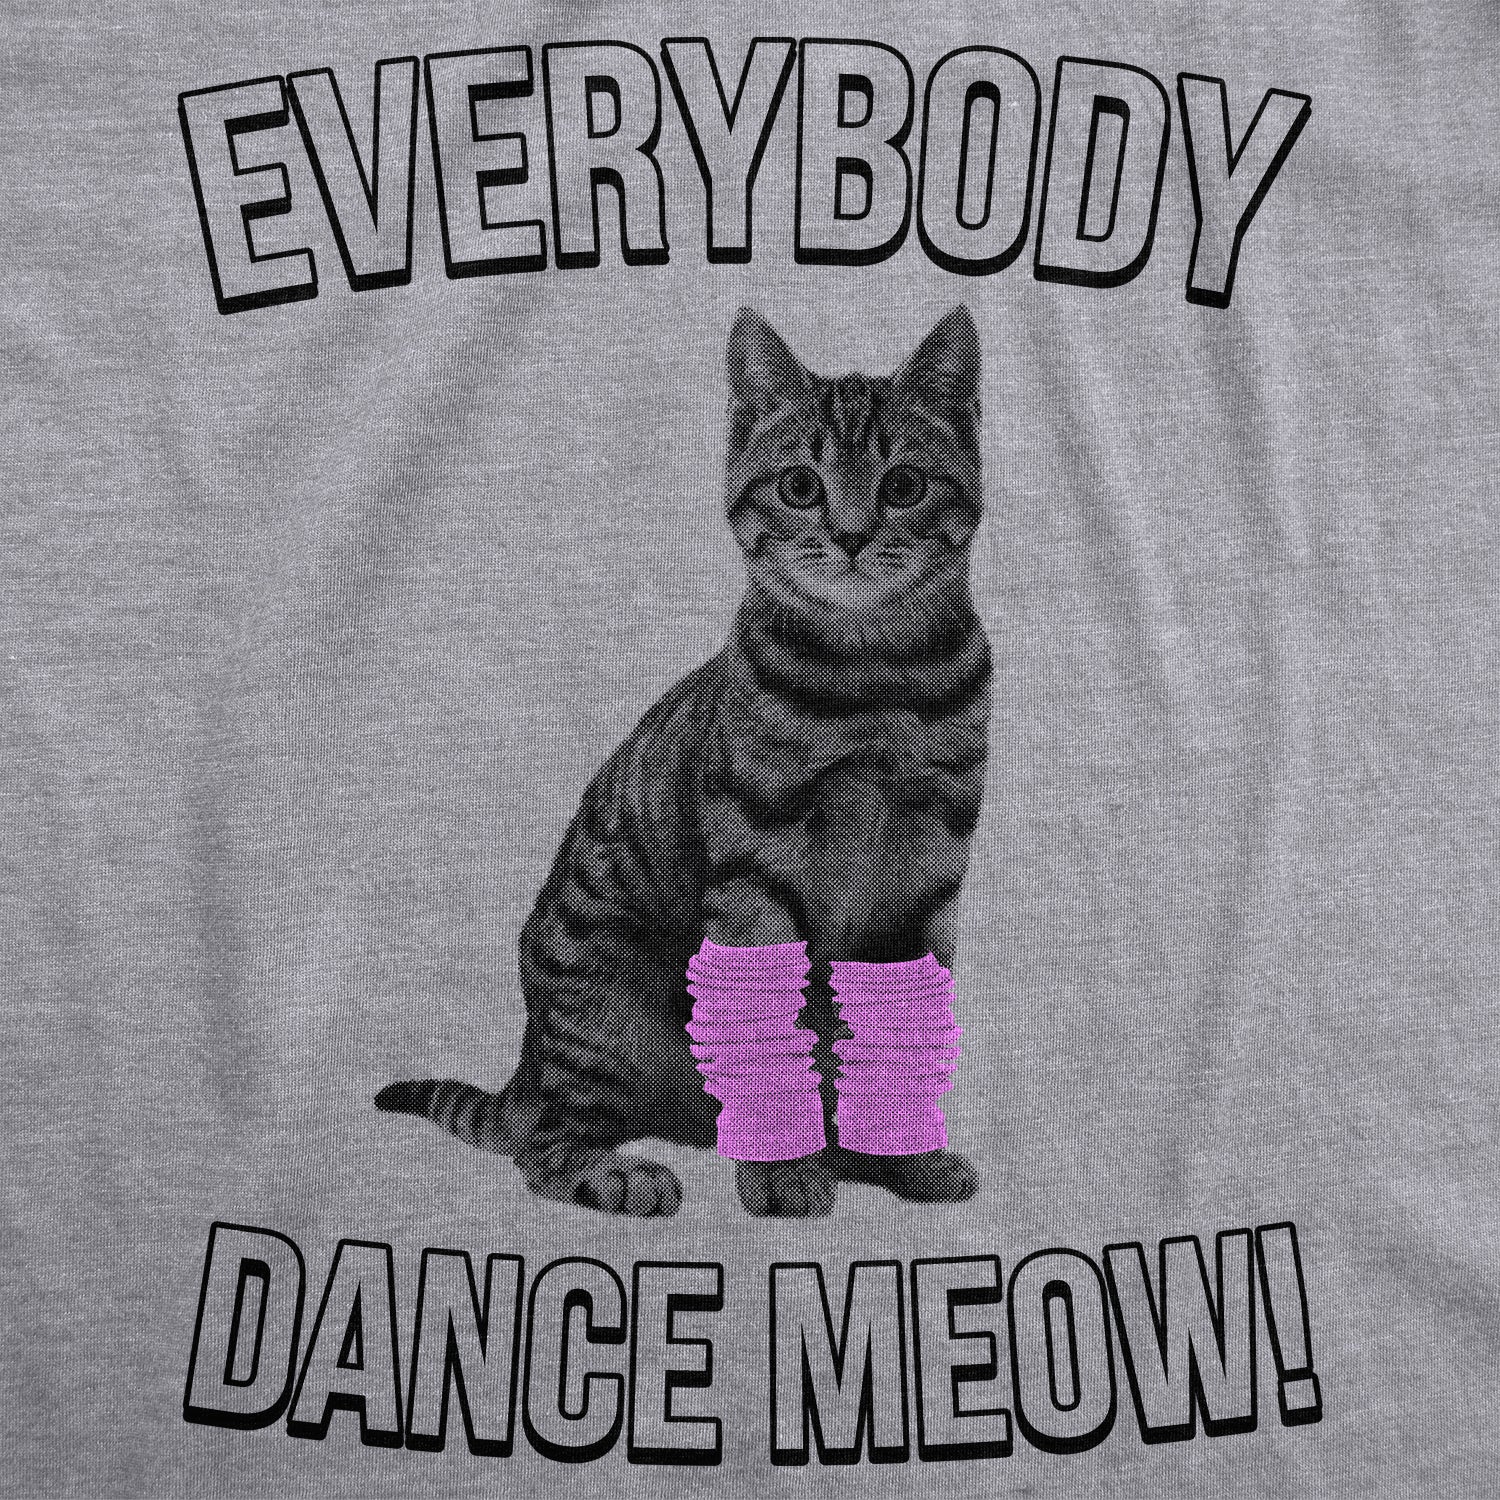 Funny Light Heather Grey Everybody Dance Meow Womens T Shirt Nerdy Cat Music Tee